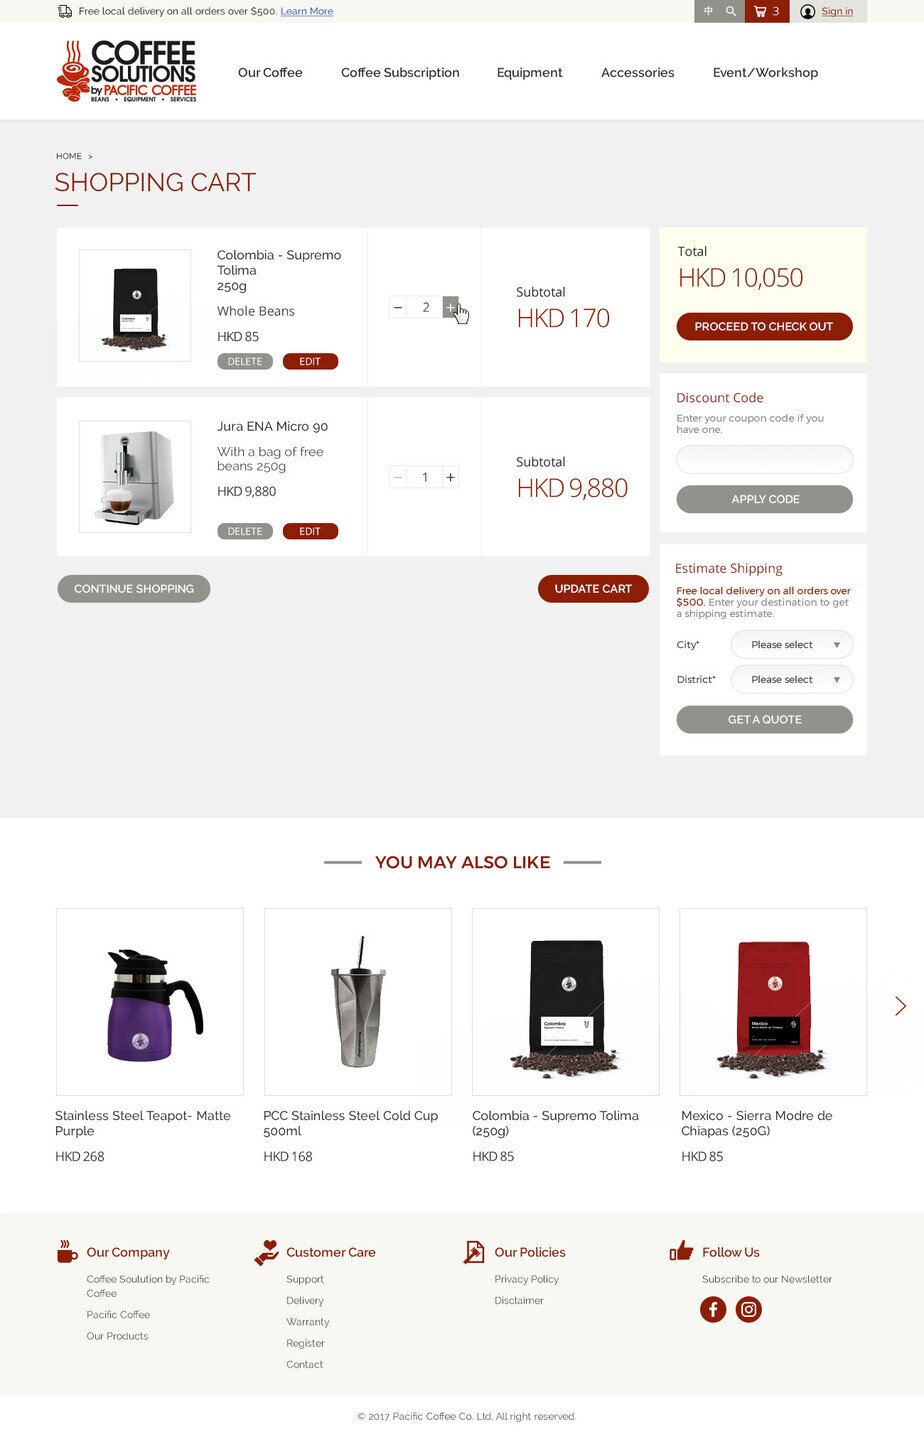 Pacific Coffee website screenshot for desktop version 6 of 6